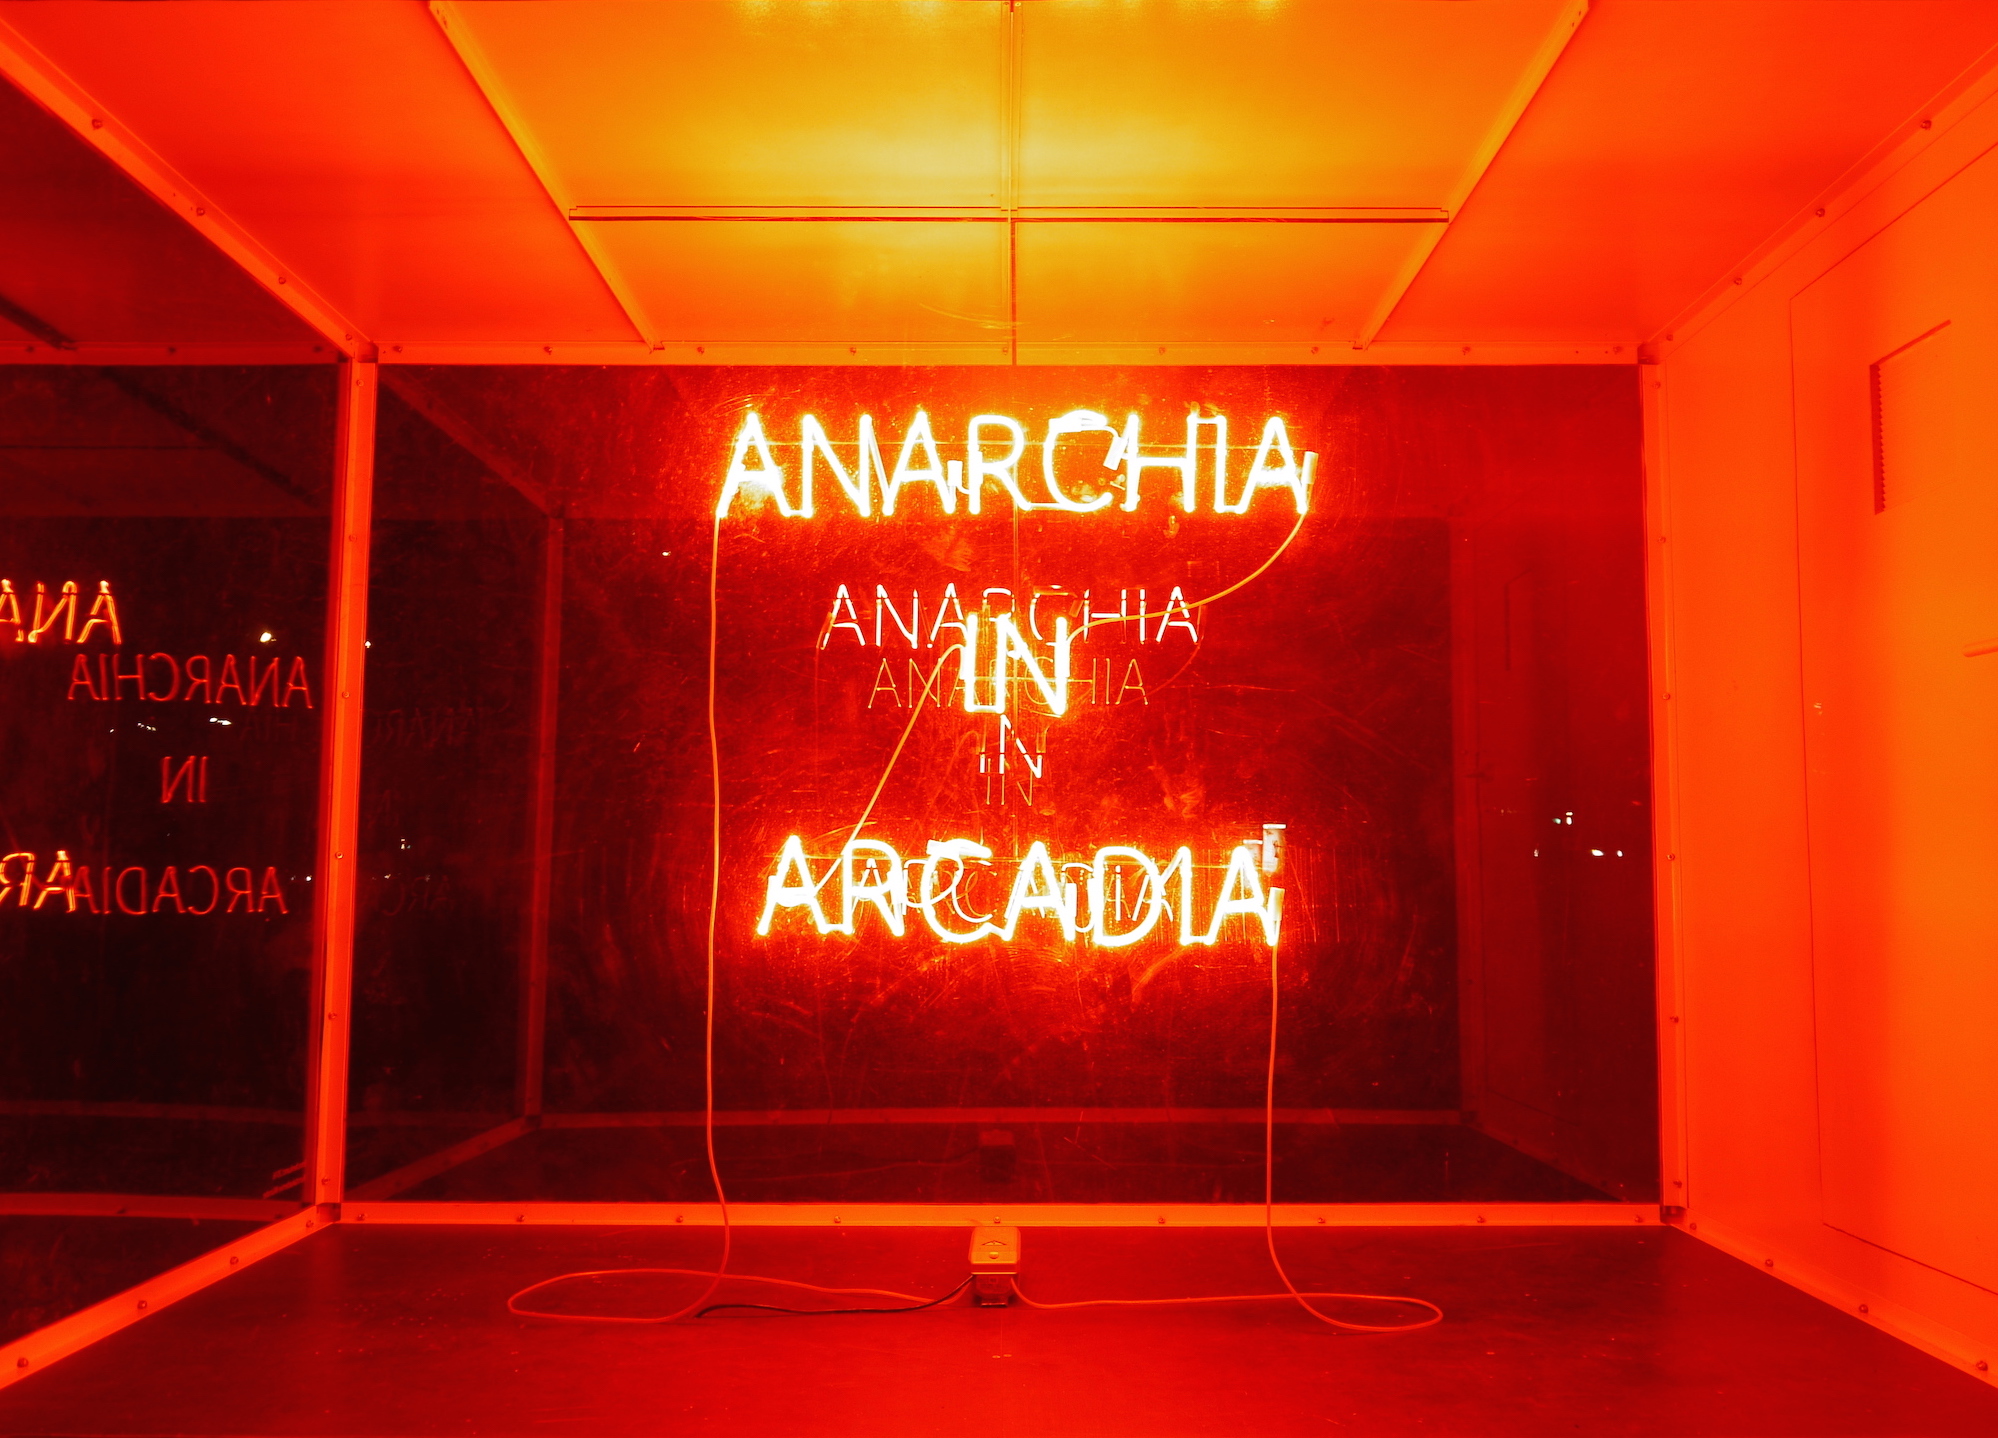 © Lis Schroeder, Anarchia in Arcadia, 2016